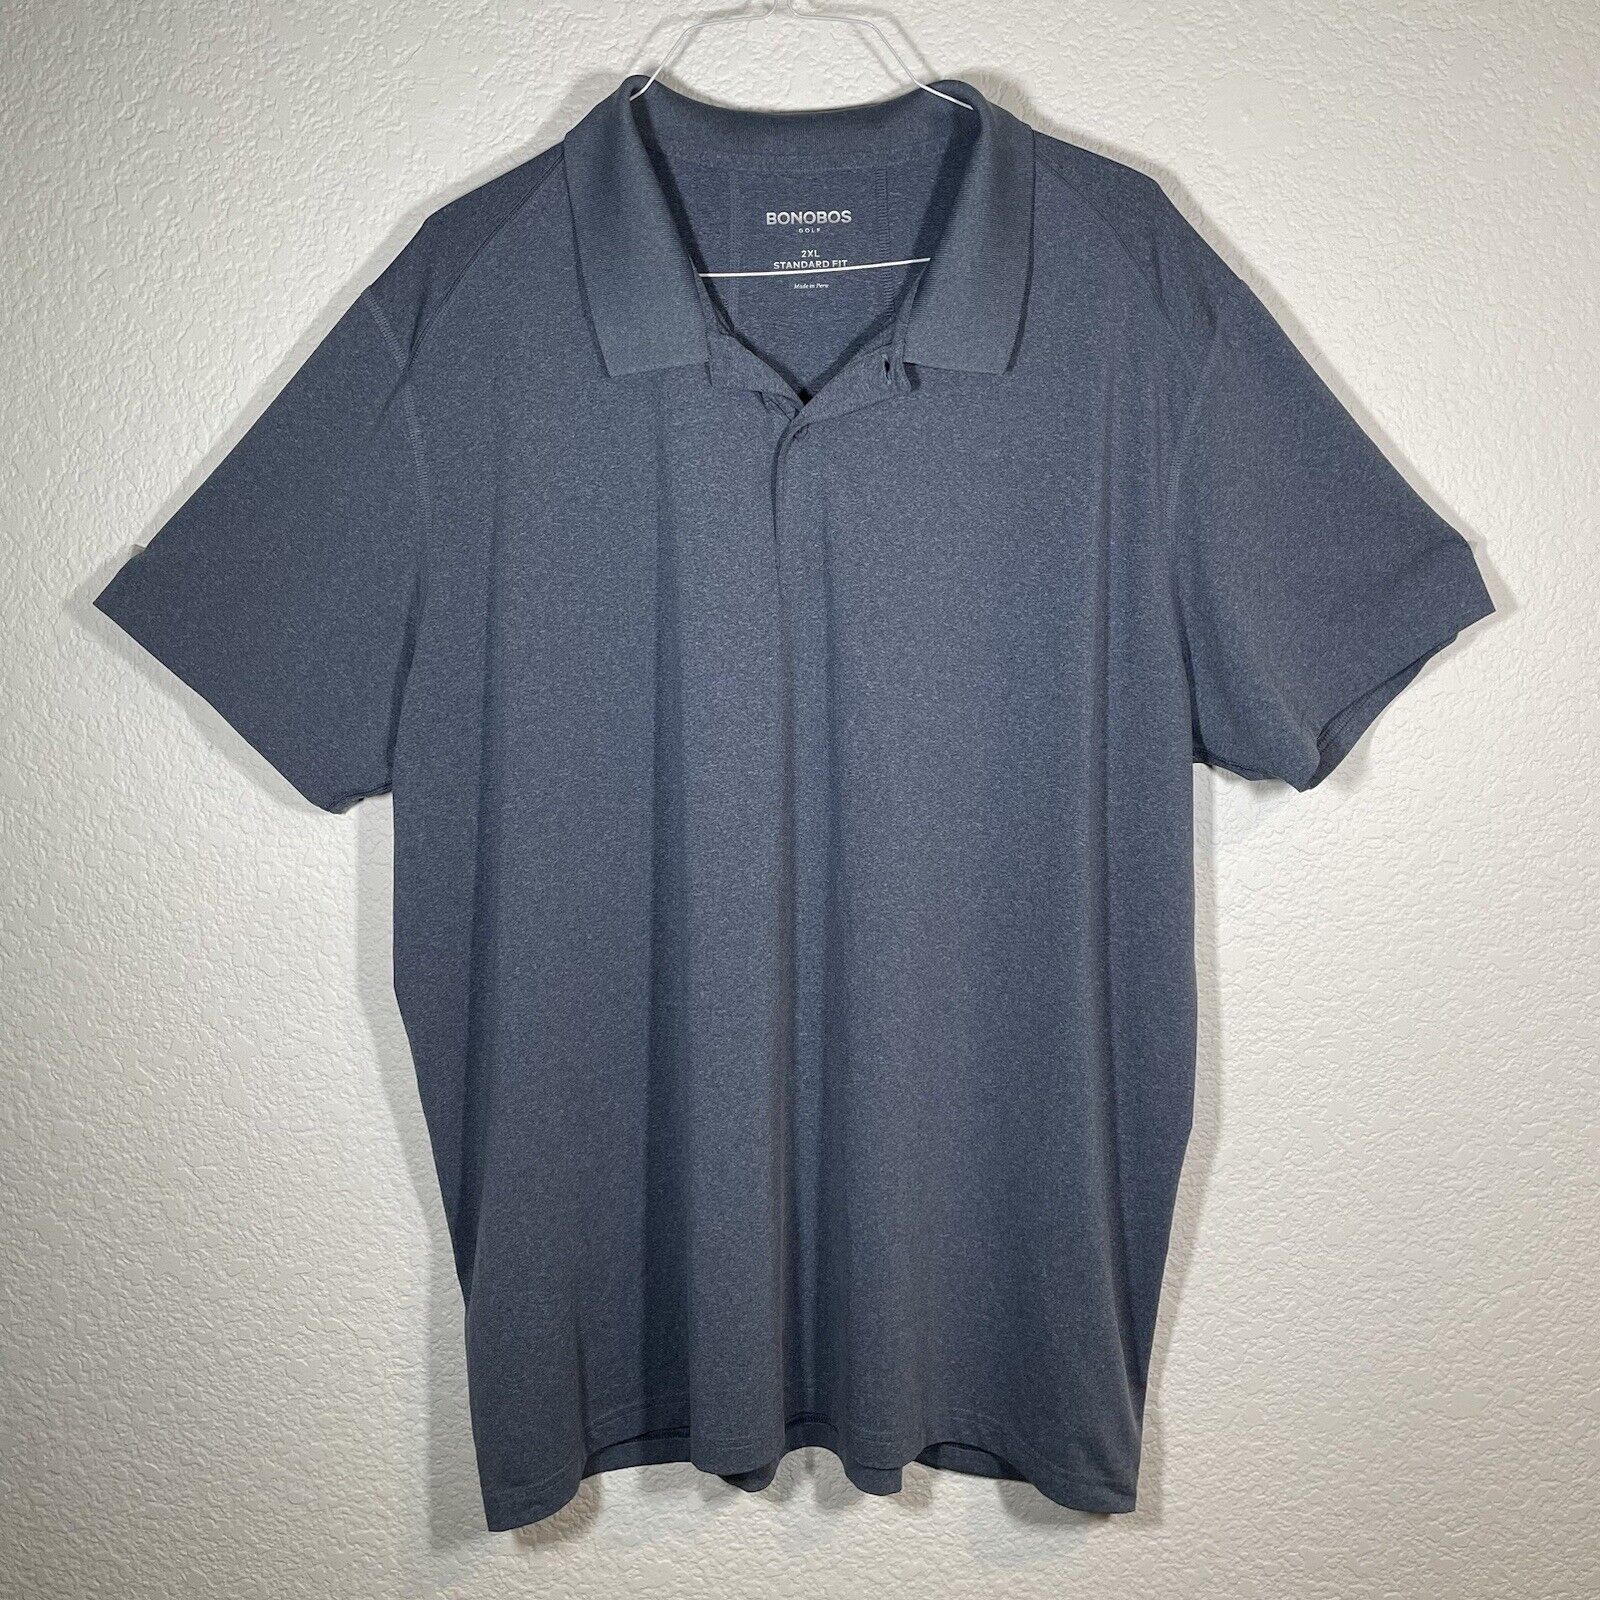 Bonobos Men's Golf Shirt Heather Blue Short Sleev… - image 1